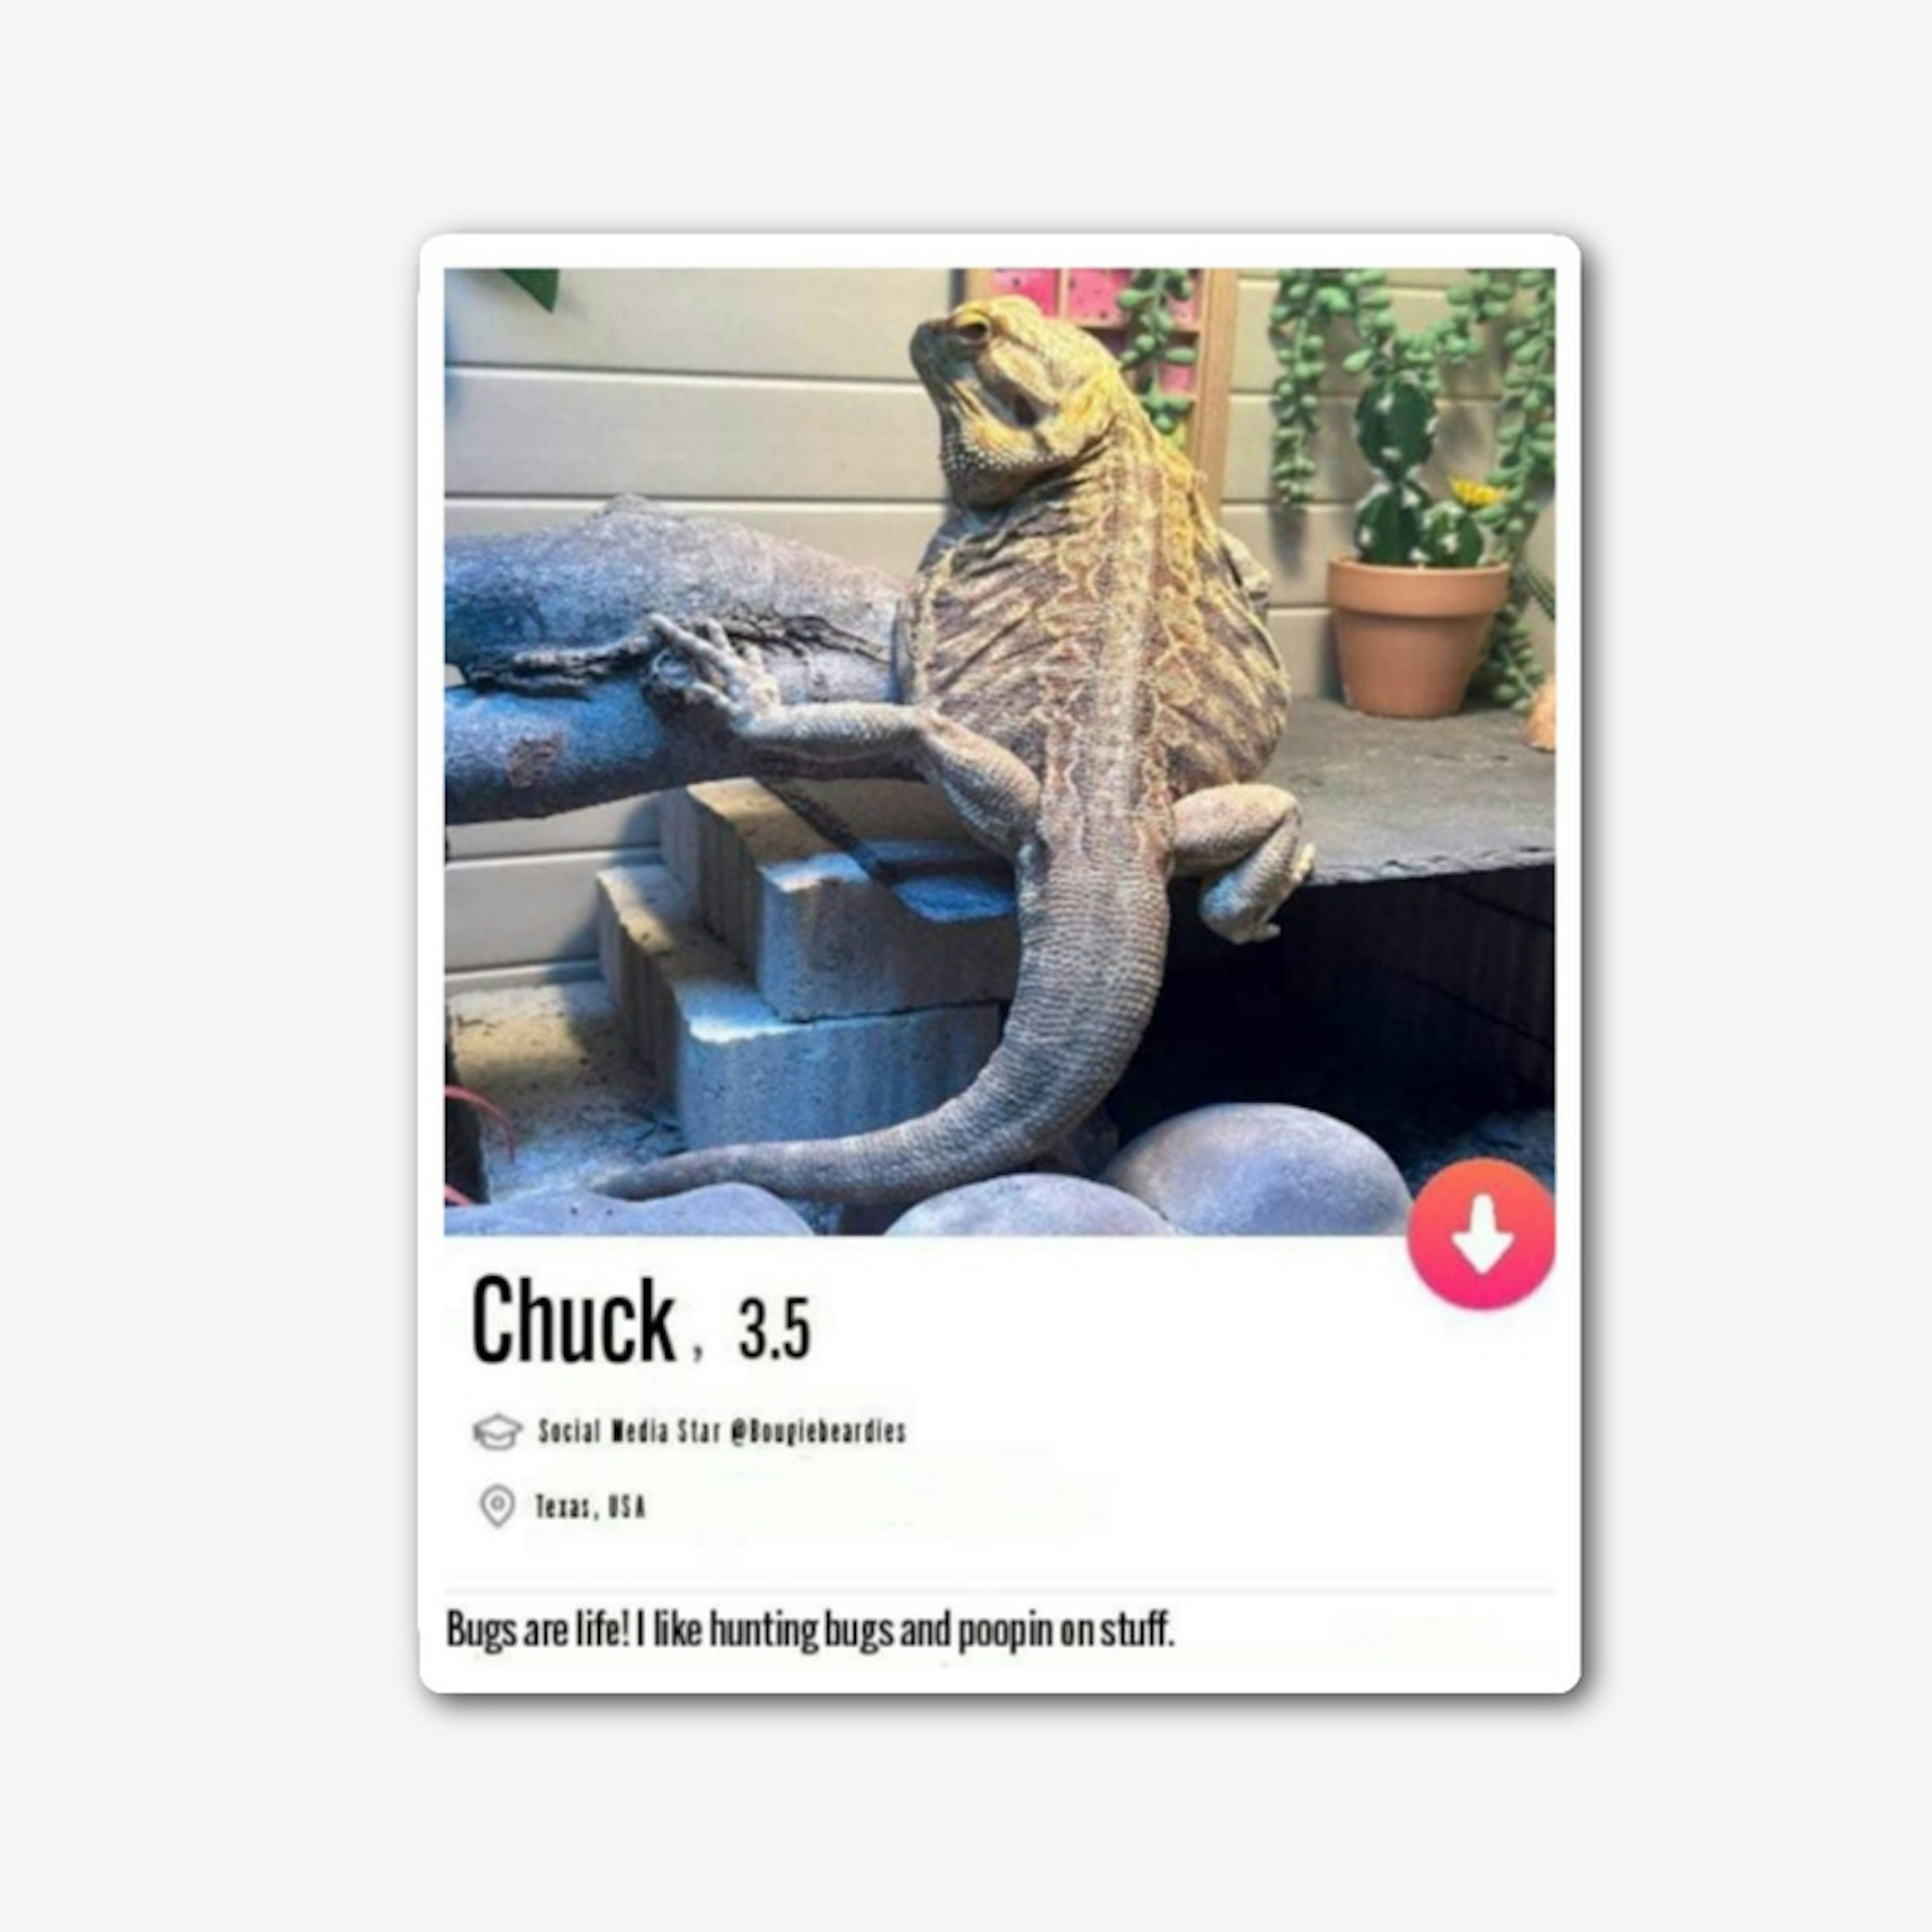 Chuck date